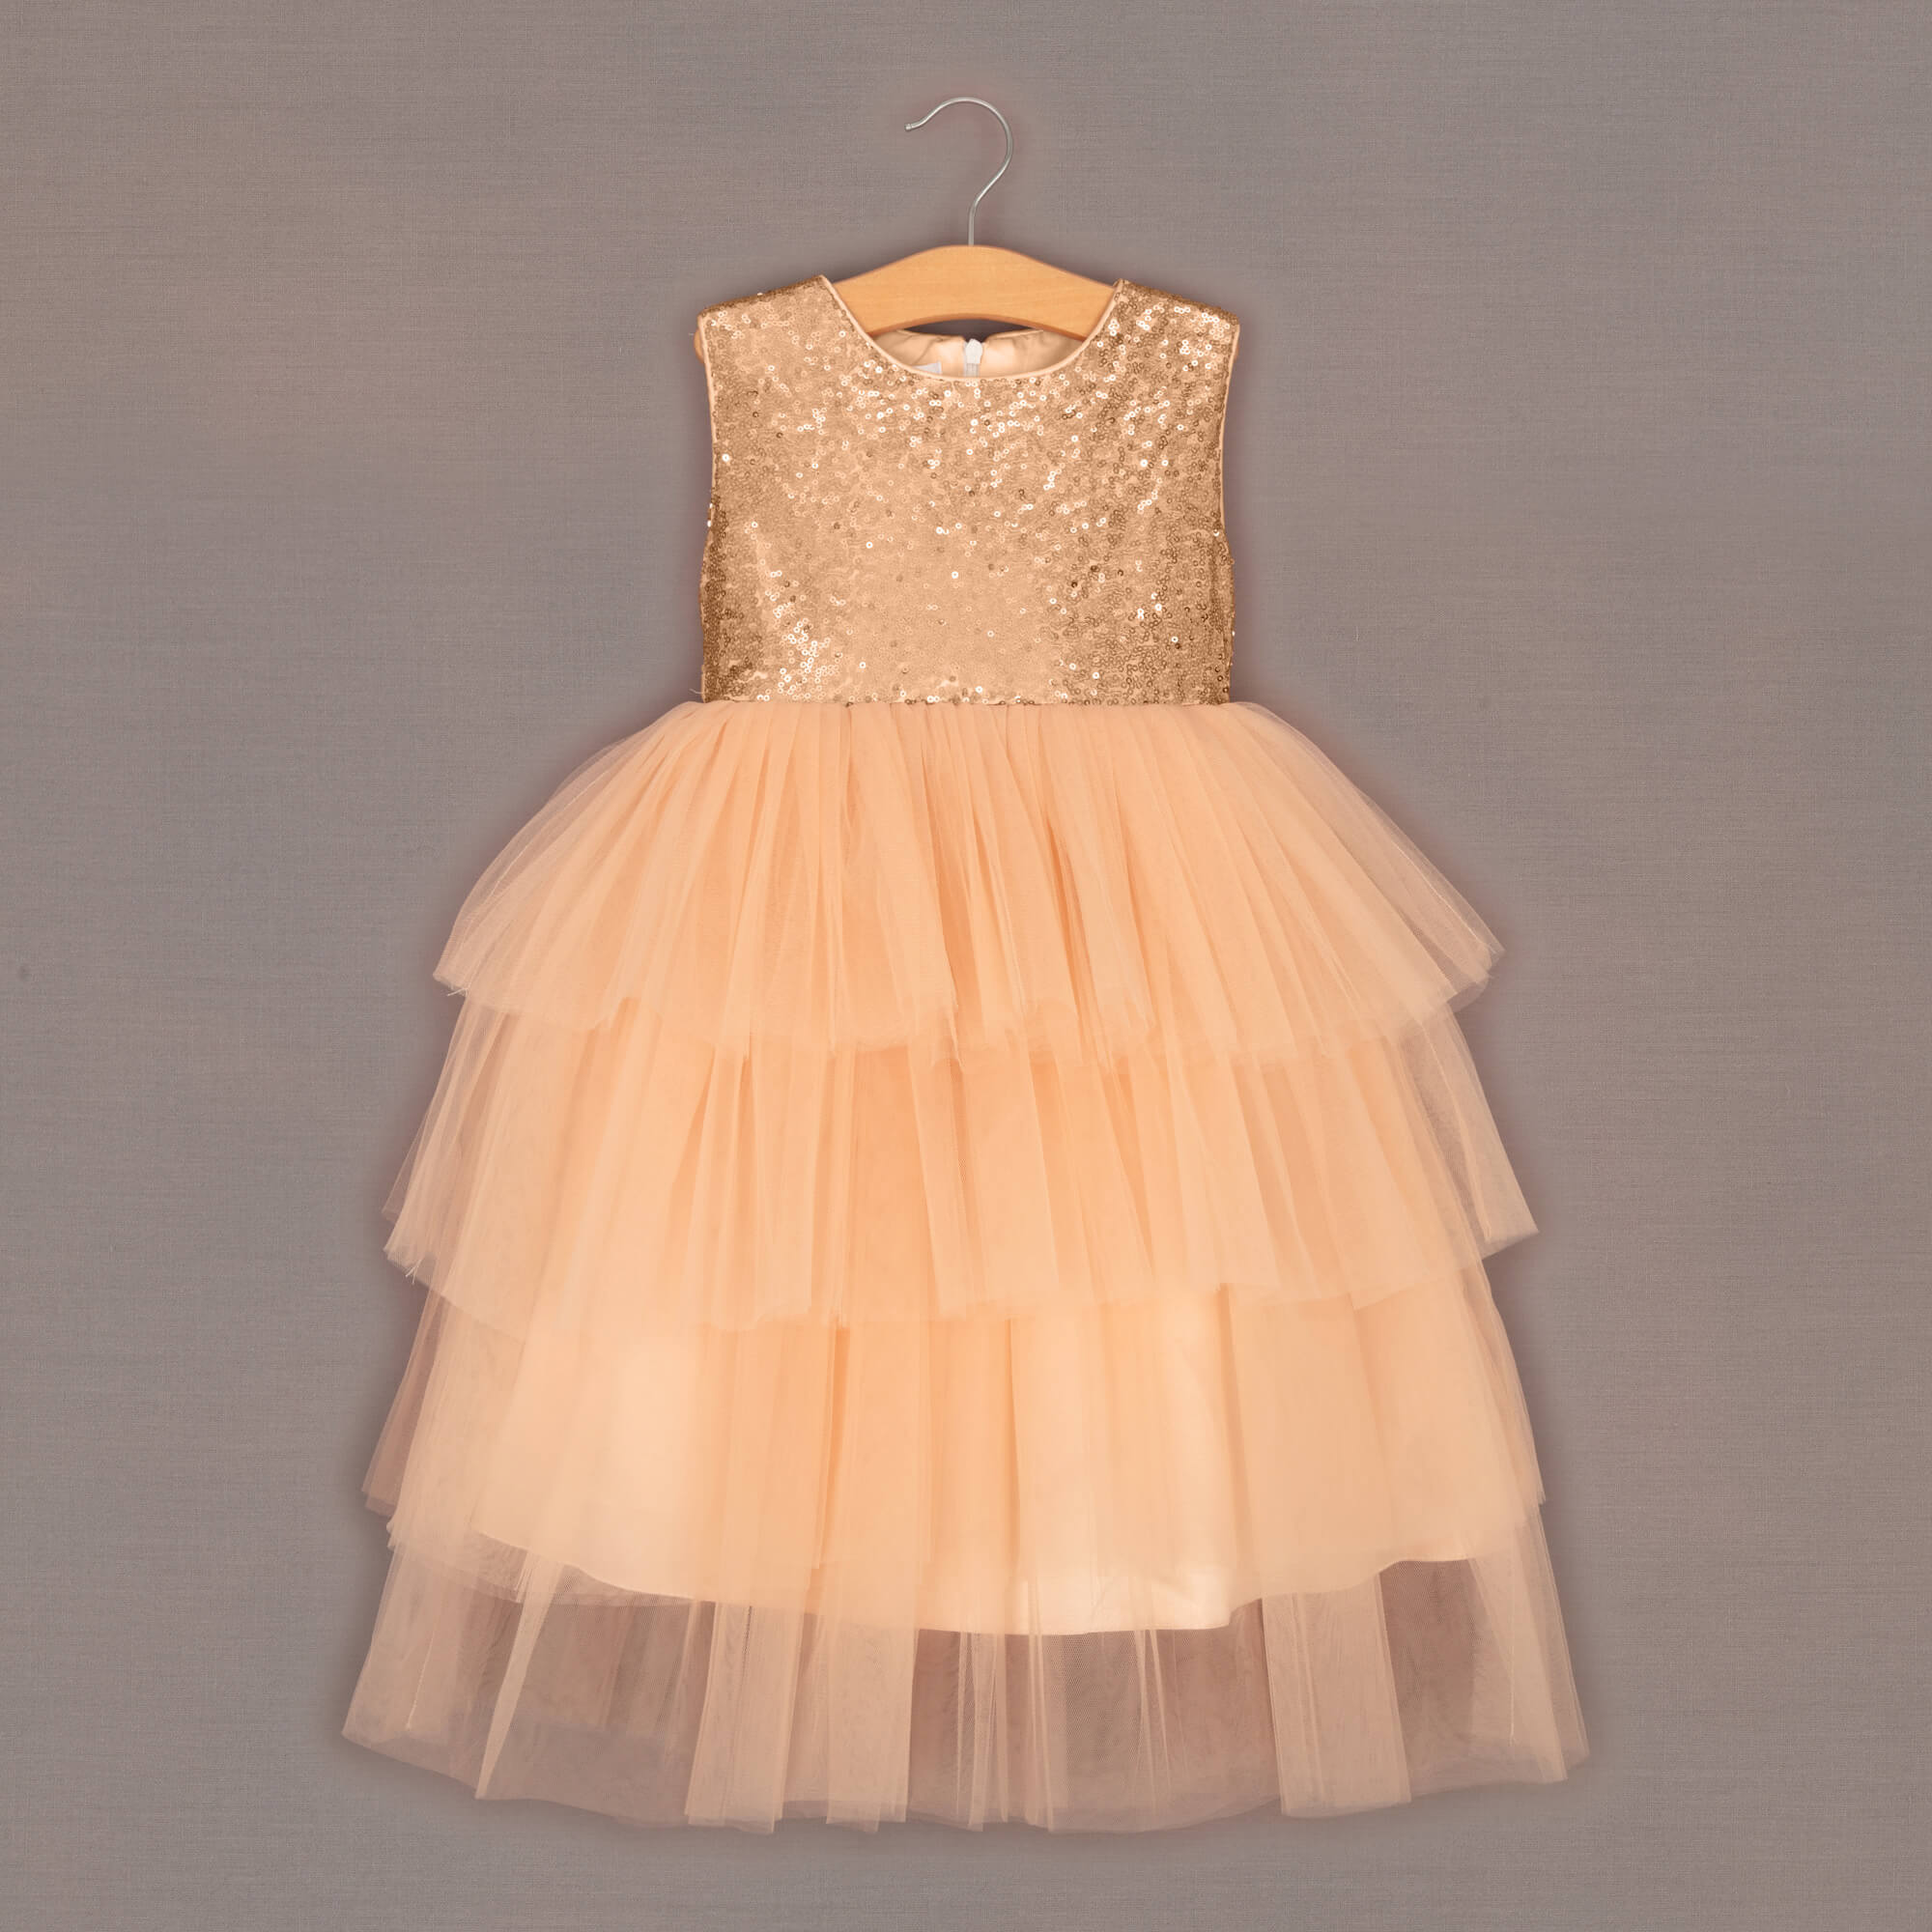 Darcy Occasion Dress - Gold / Blush - SALE